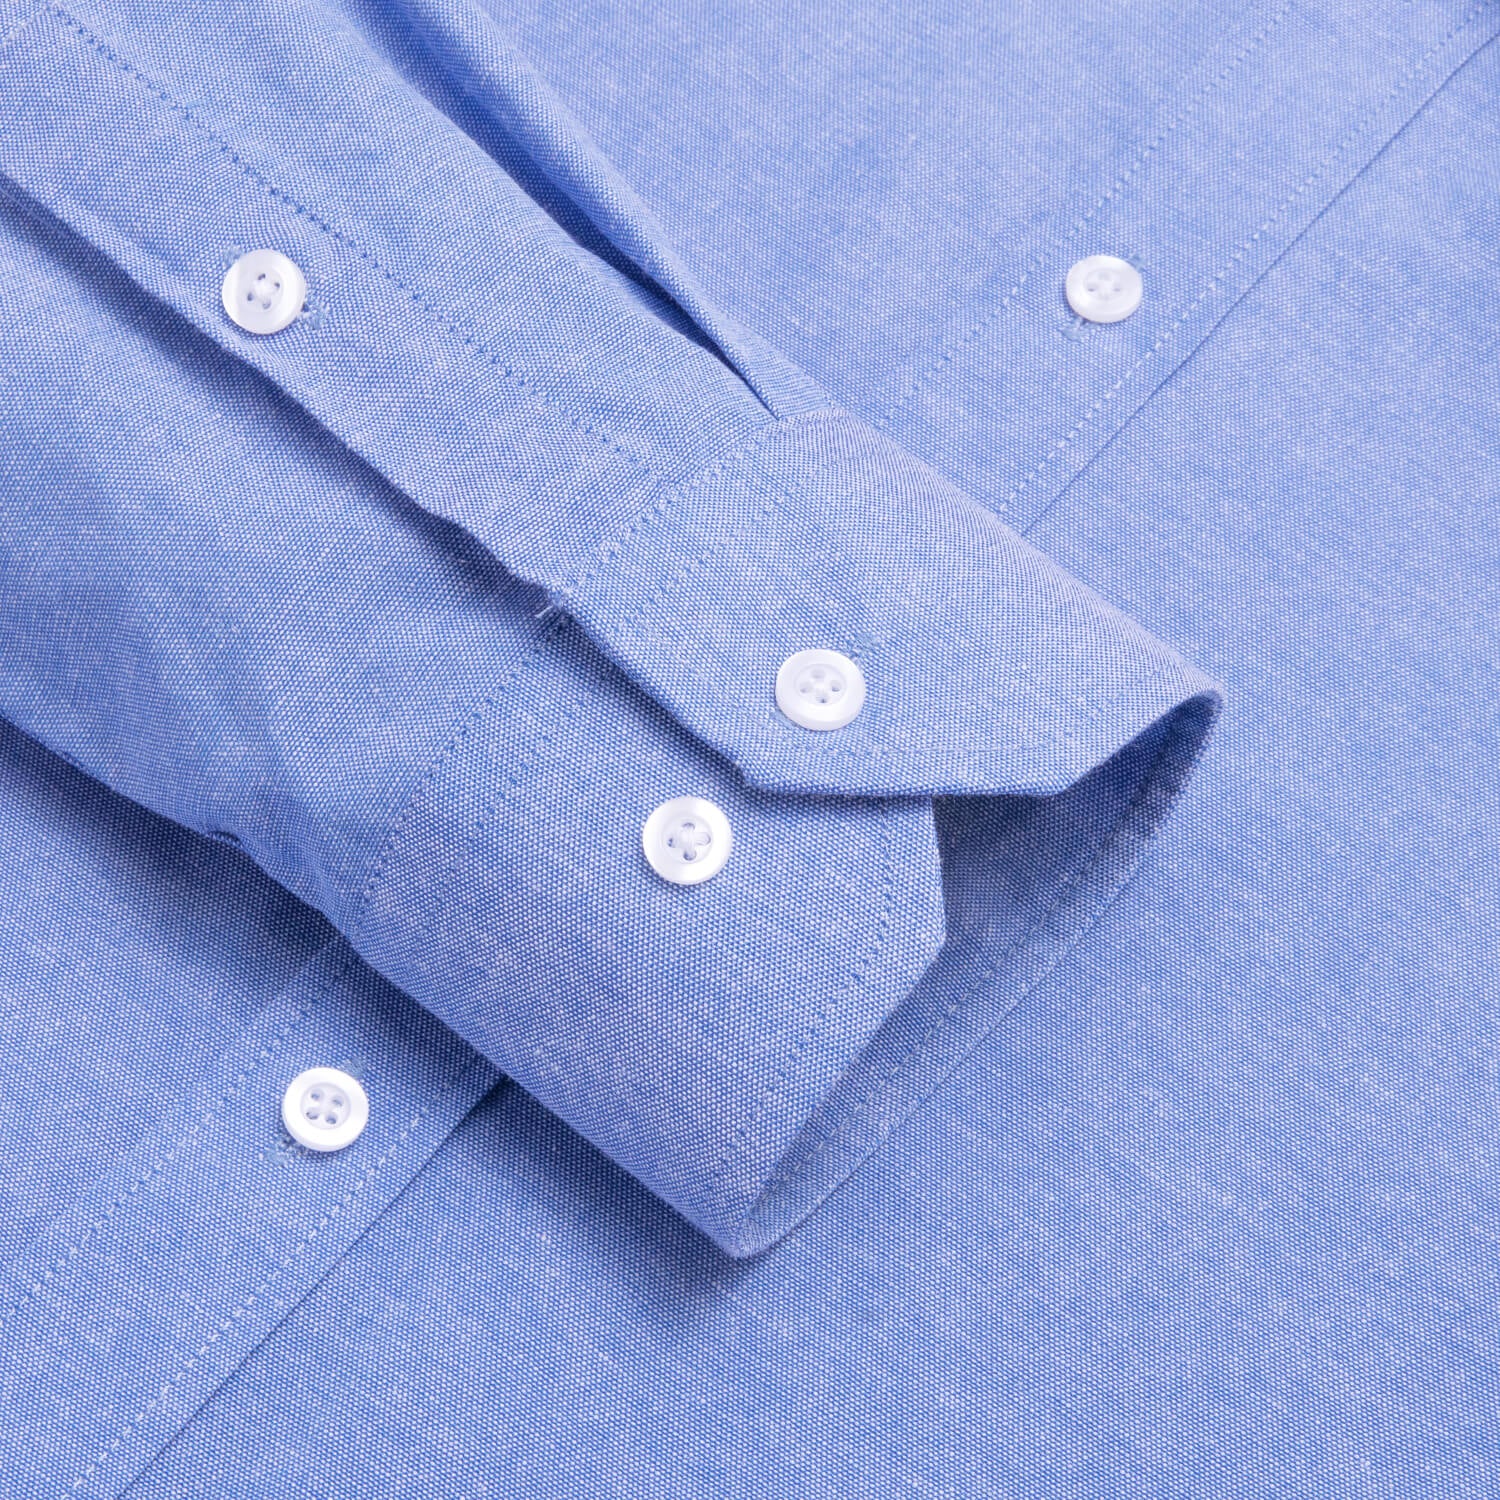 Hi-Tie Button Down Shirt Cornflower Blue Solid Silk Men's Dress Shirt